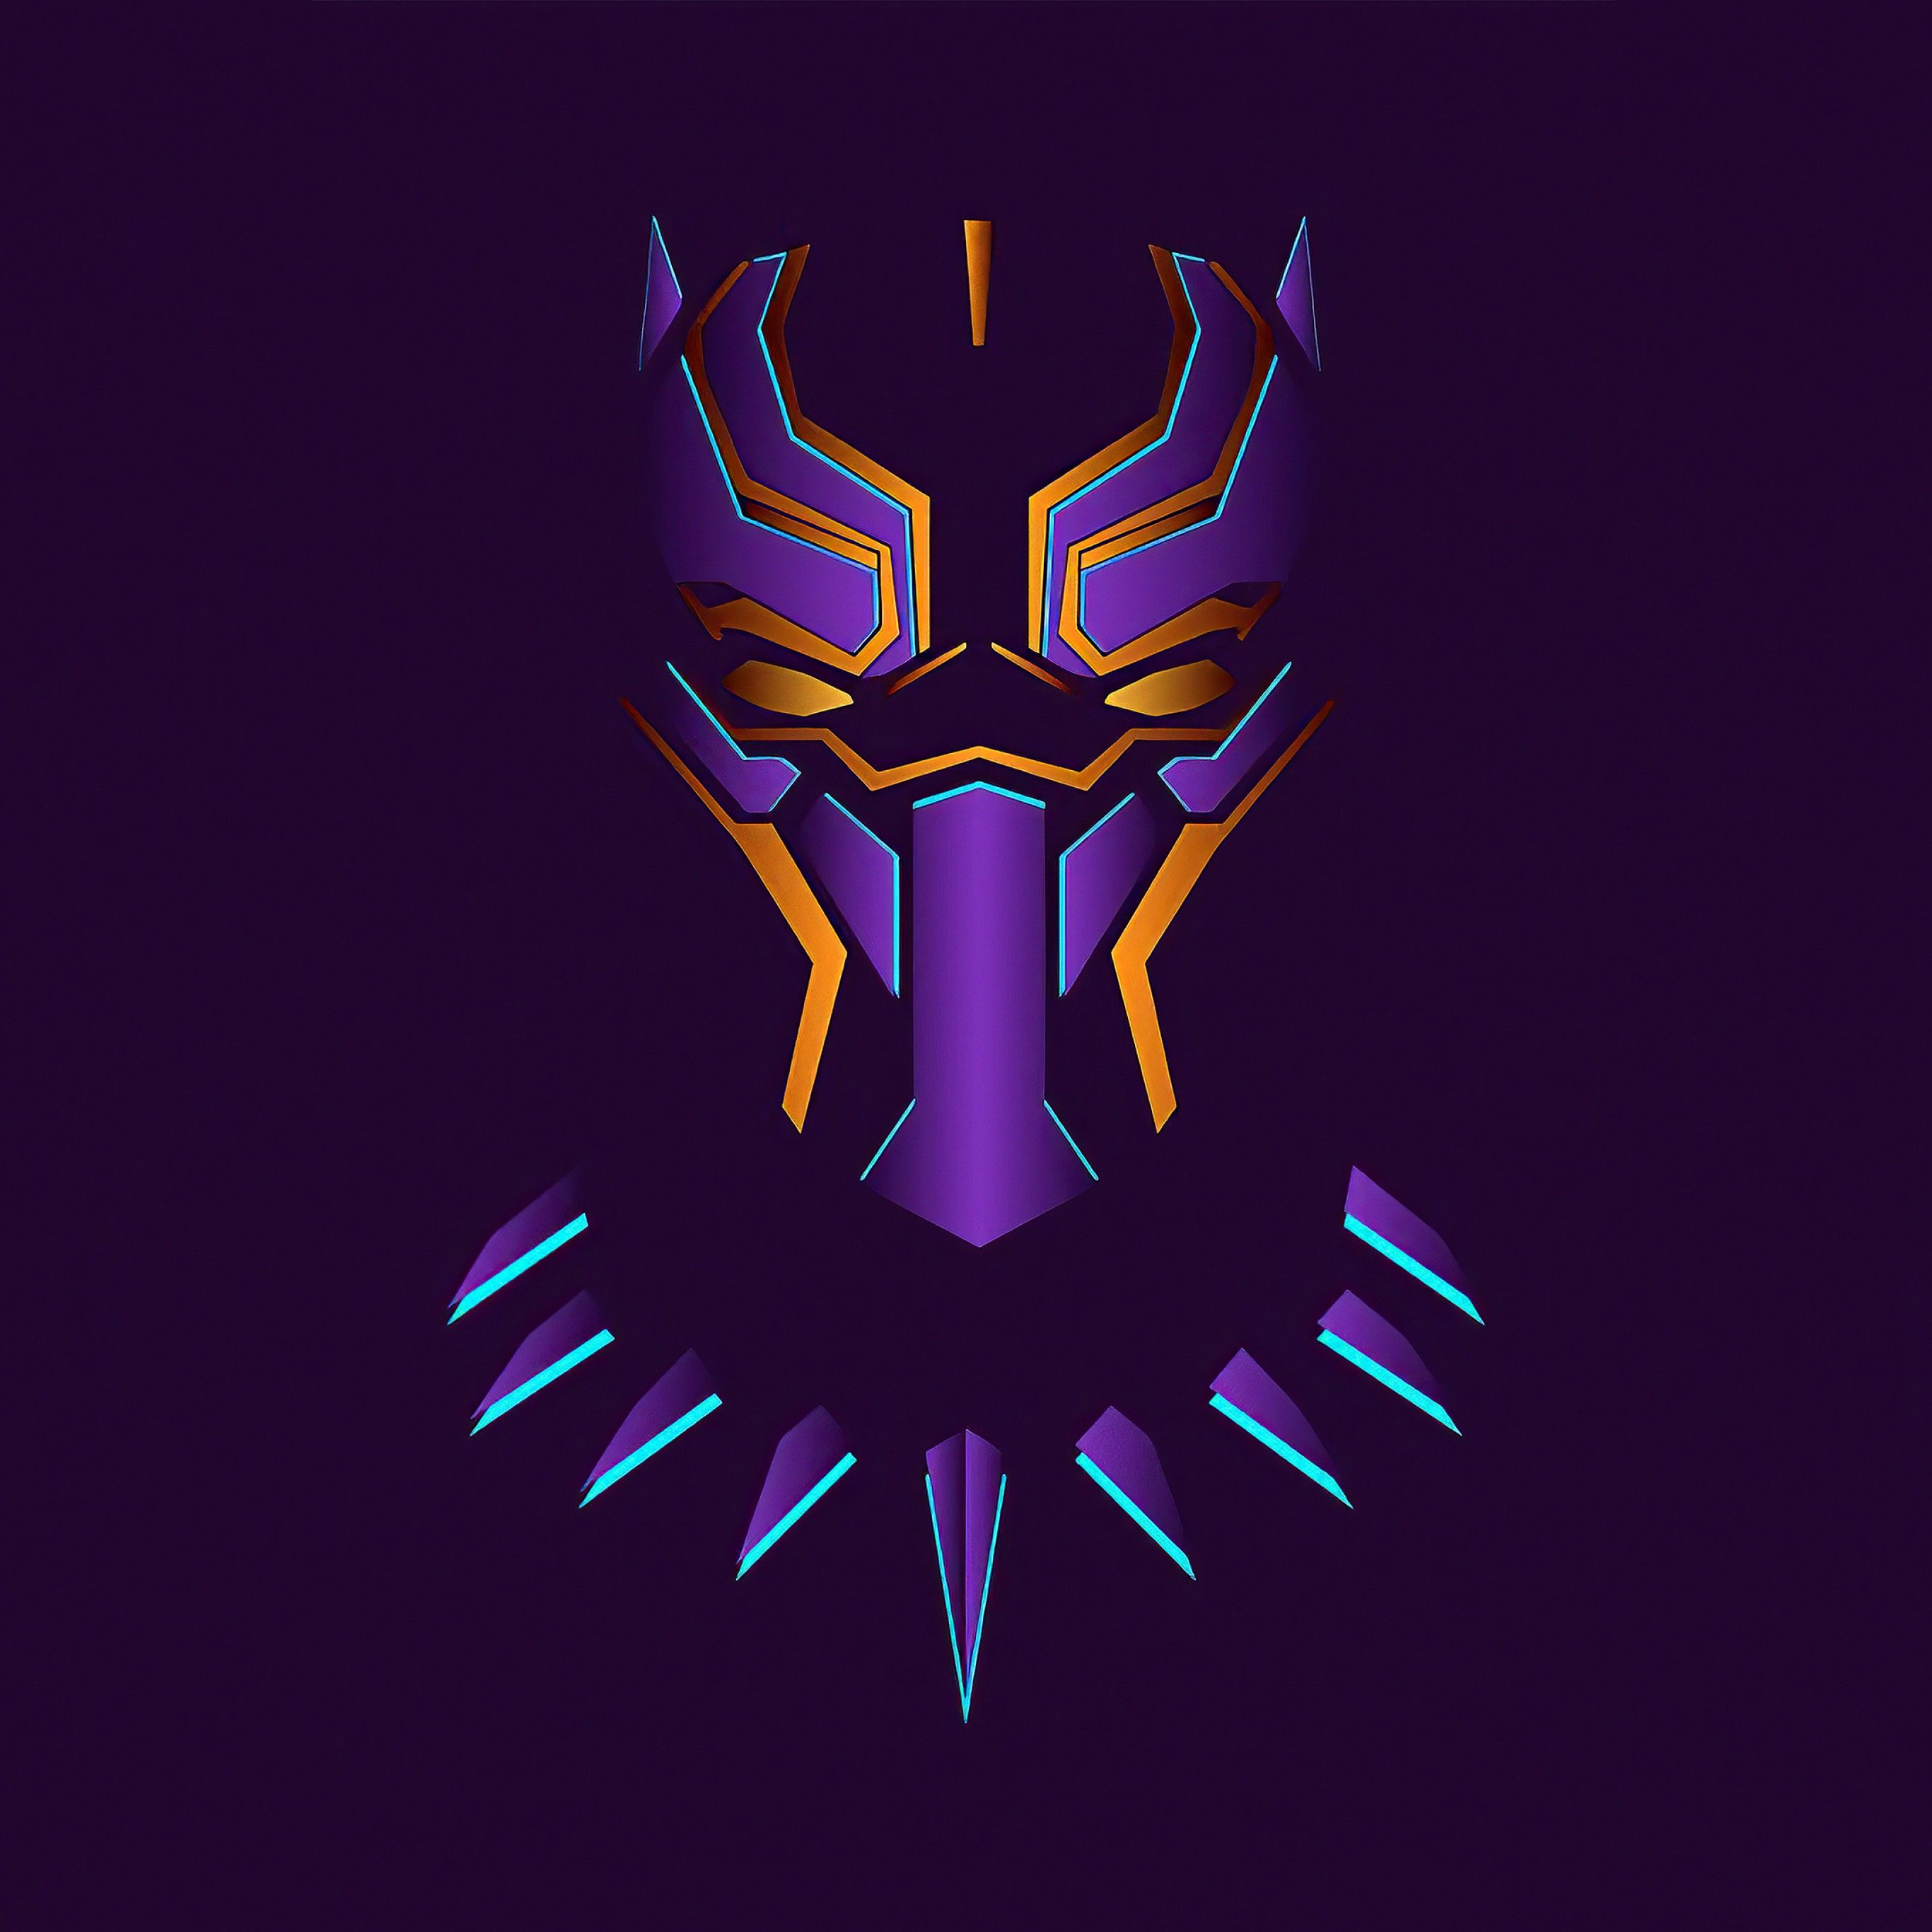 Black Panther 4K Wallpaper, Purple background, Minimal art, Graphics CGI